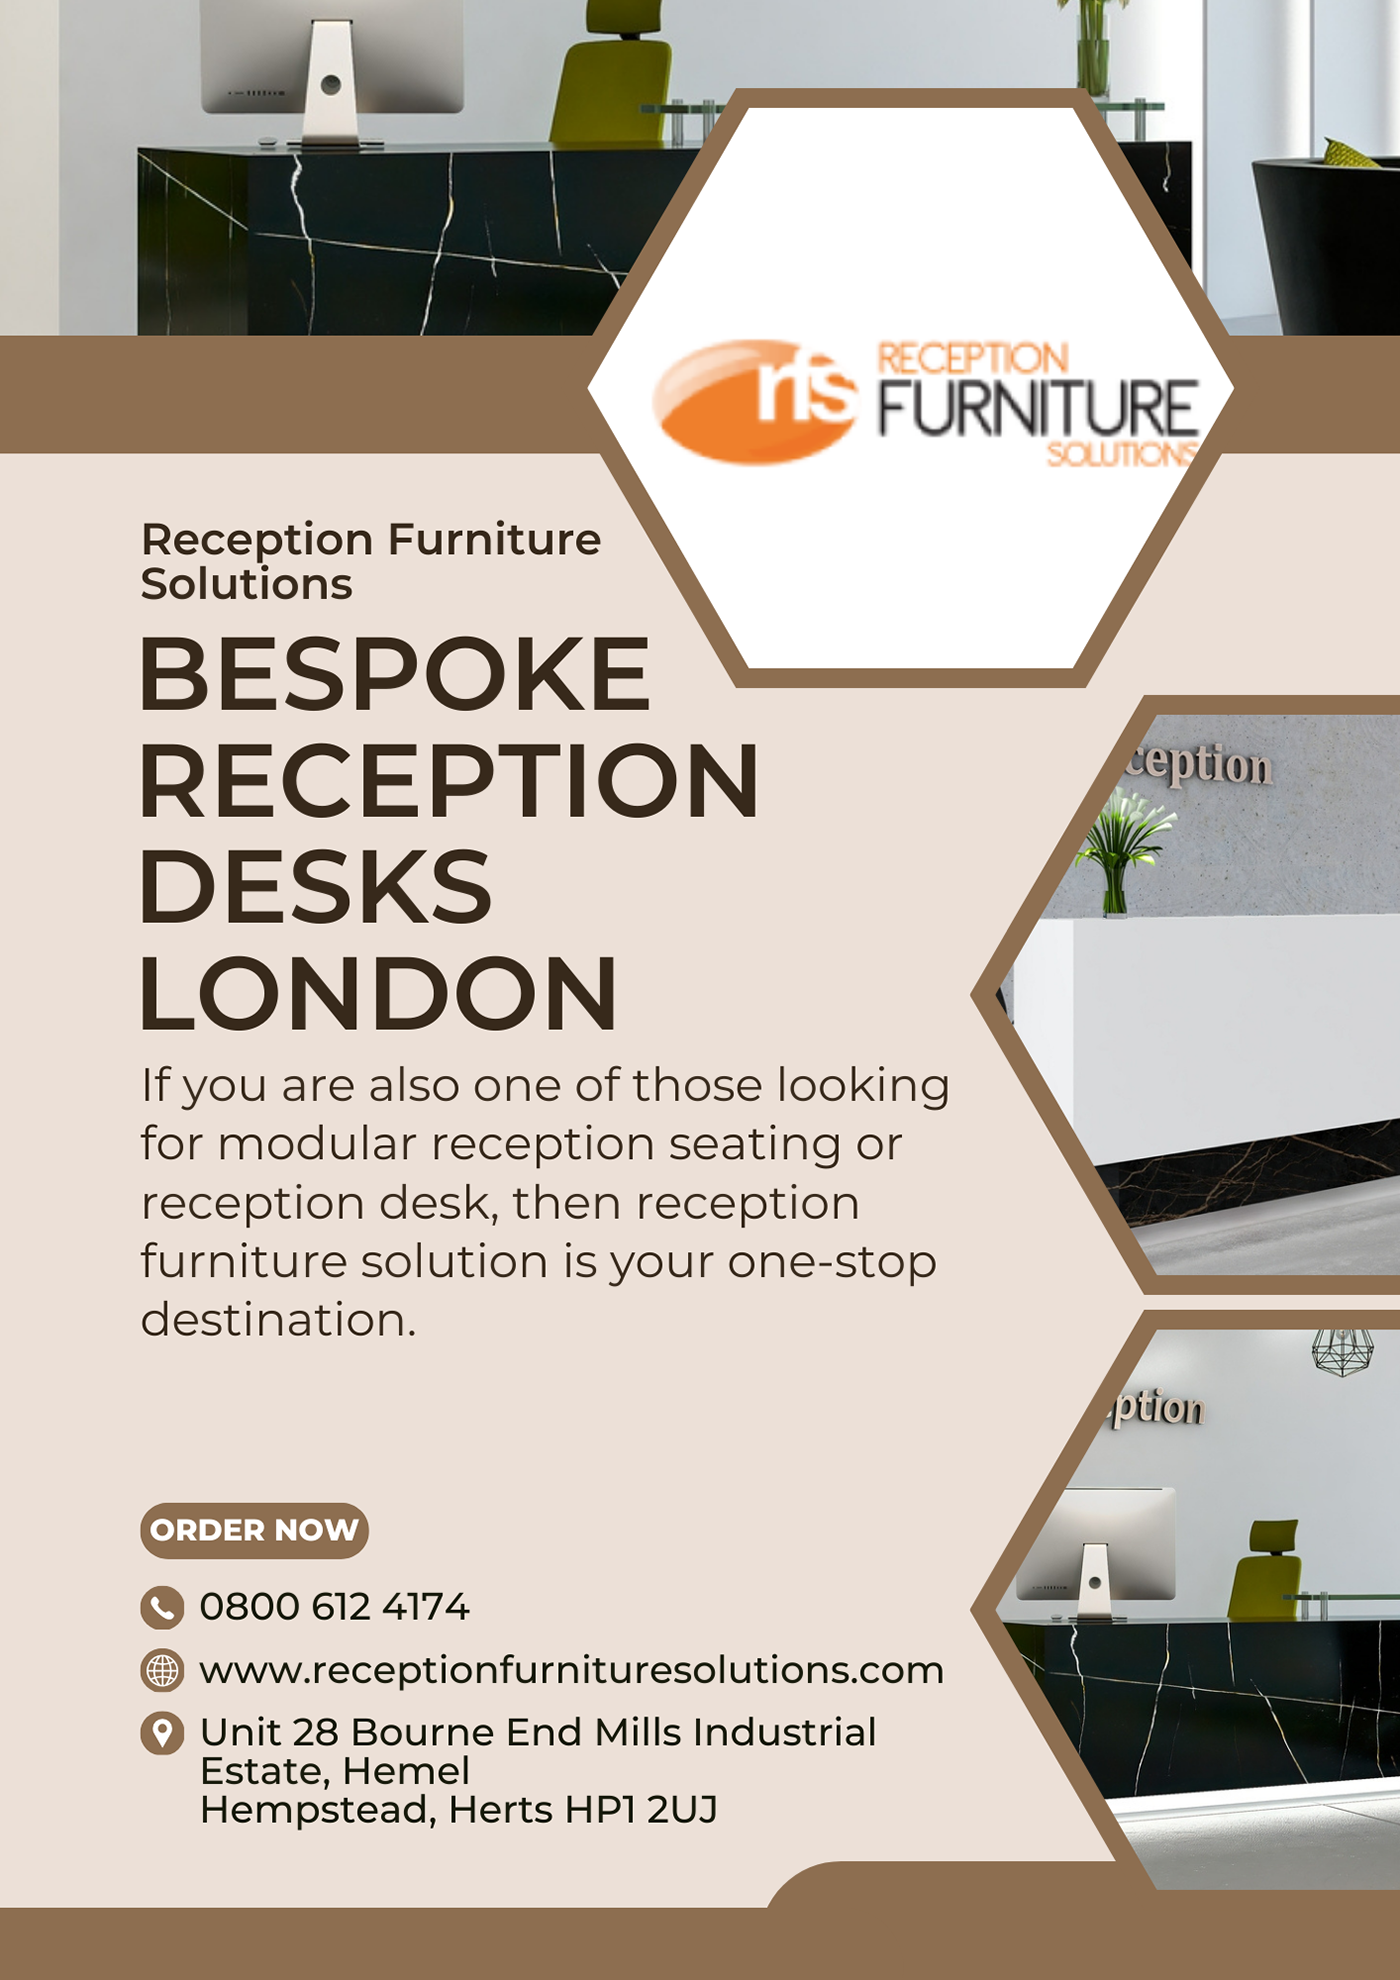 London Reception desk furniture architecture Reception Furniture